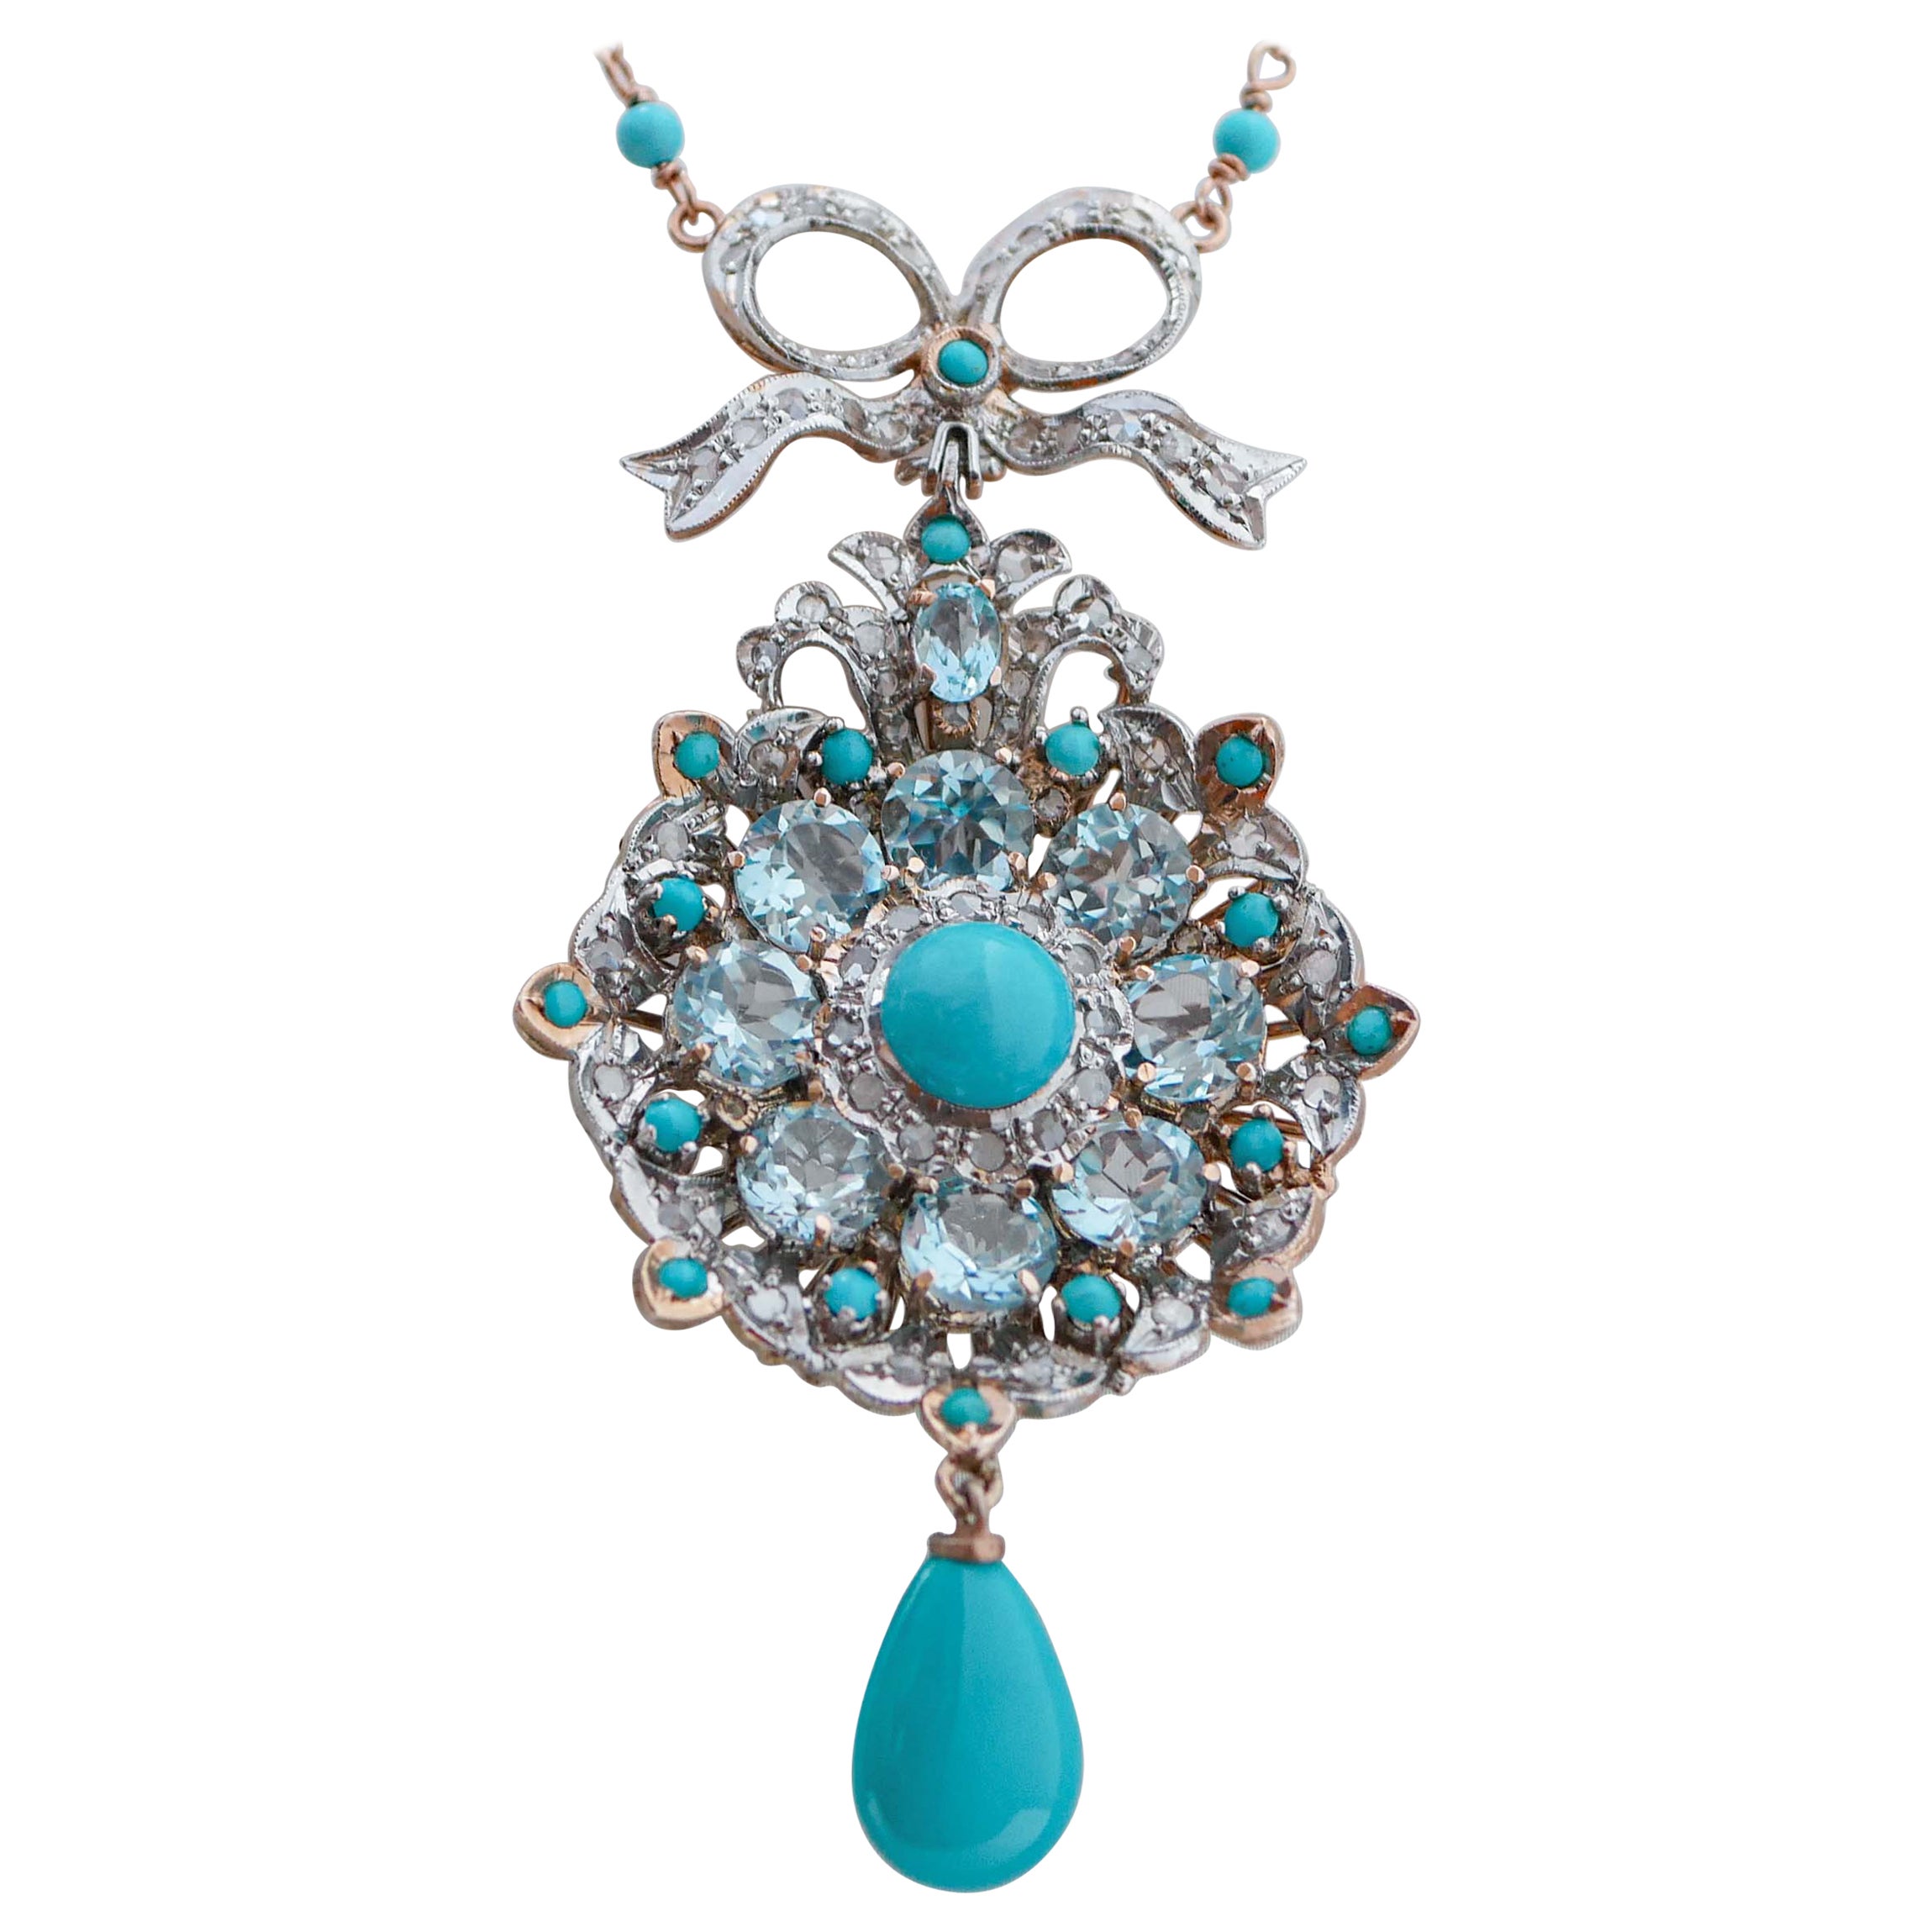 Aquamarine Colour Topazs, Turquoise, Diamonds, Gold and Silver Pendant Necklace. For Sale